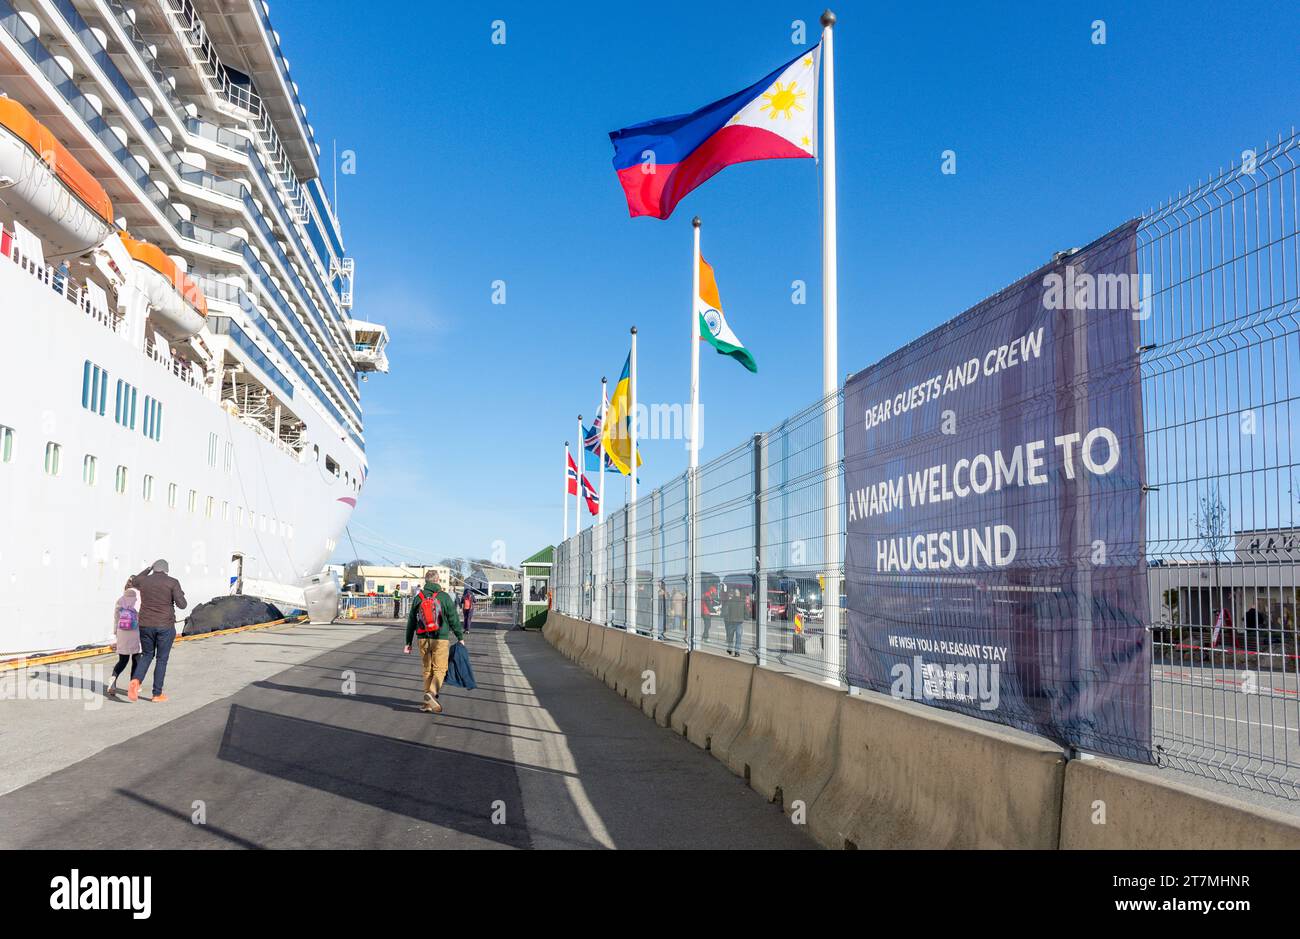 Haugesund Cruisehavn (cruise port) welcome sign, Haugesund, Rogaland County, Norway Stock Photo